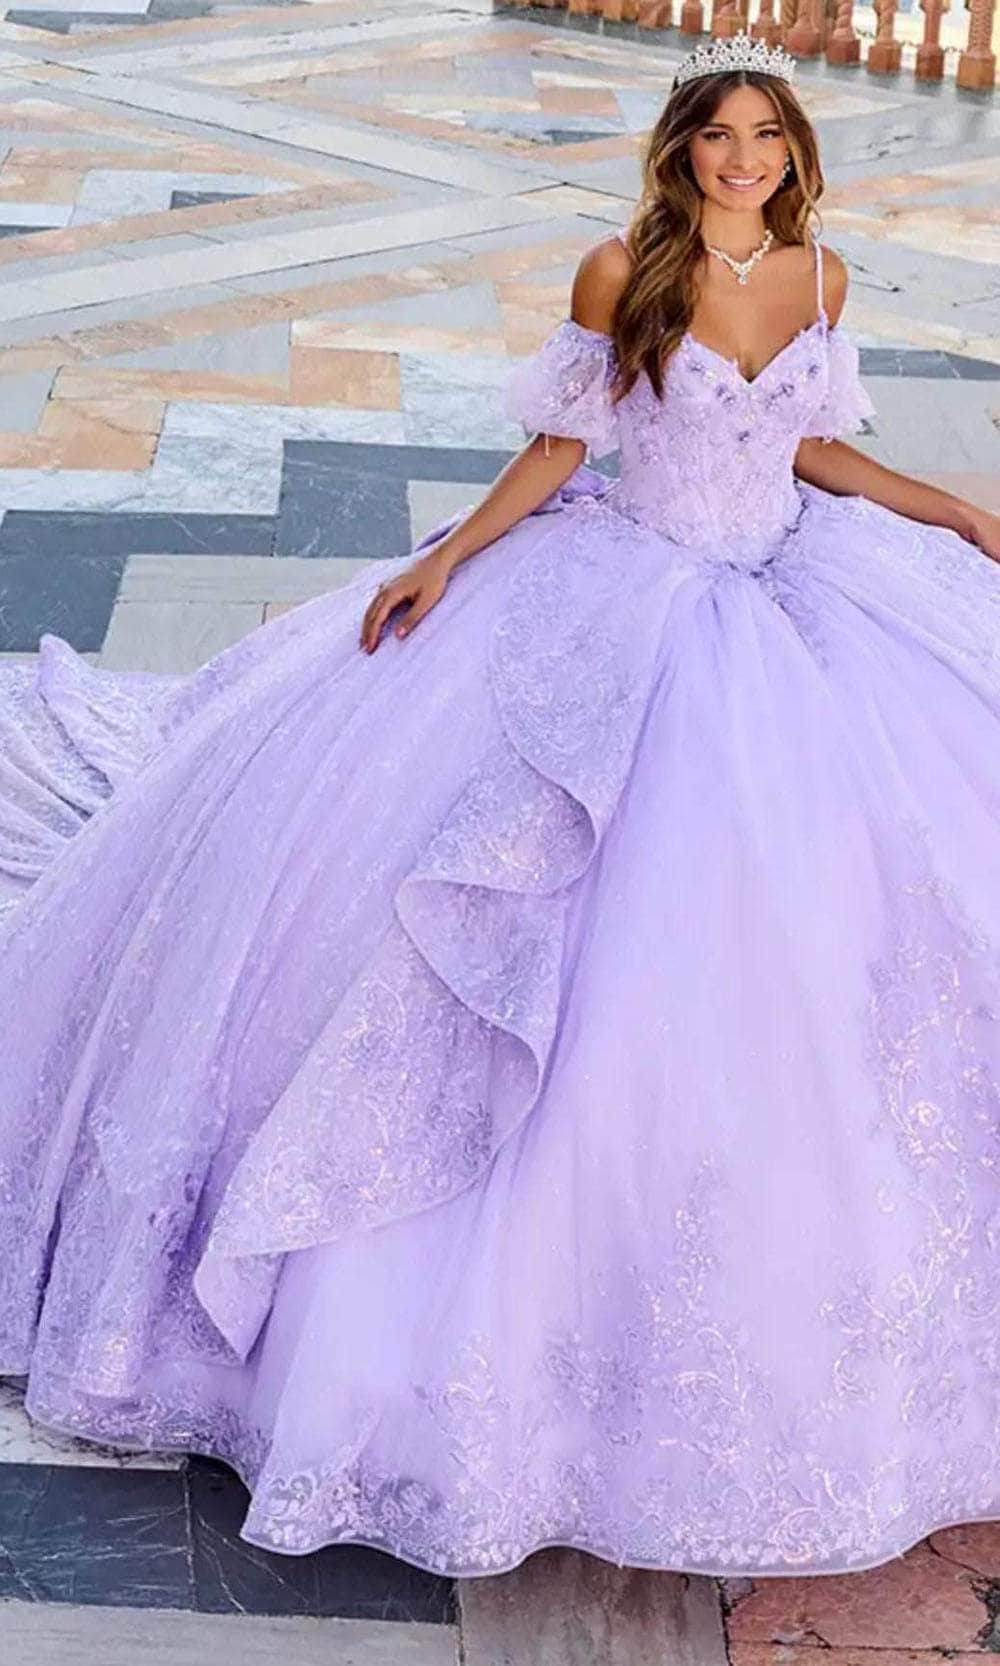 Princesa by Ariana Vara PR30161 - Short Sleeves Prom Gown
